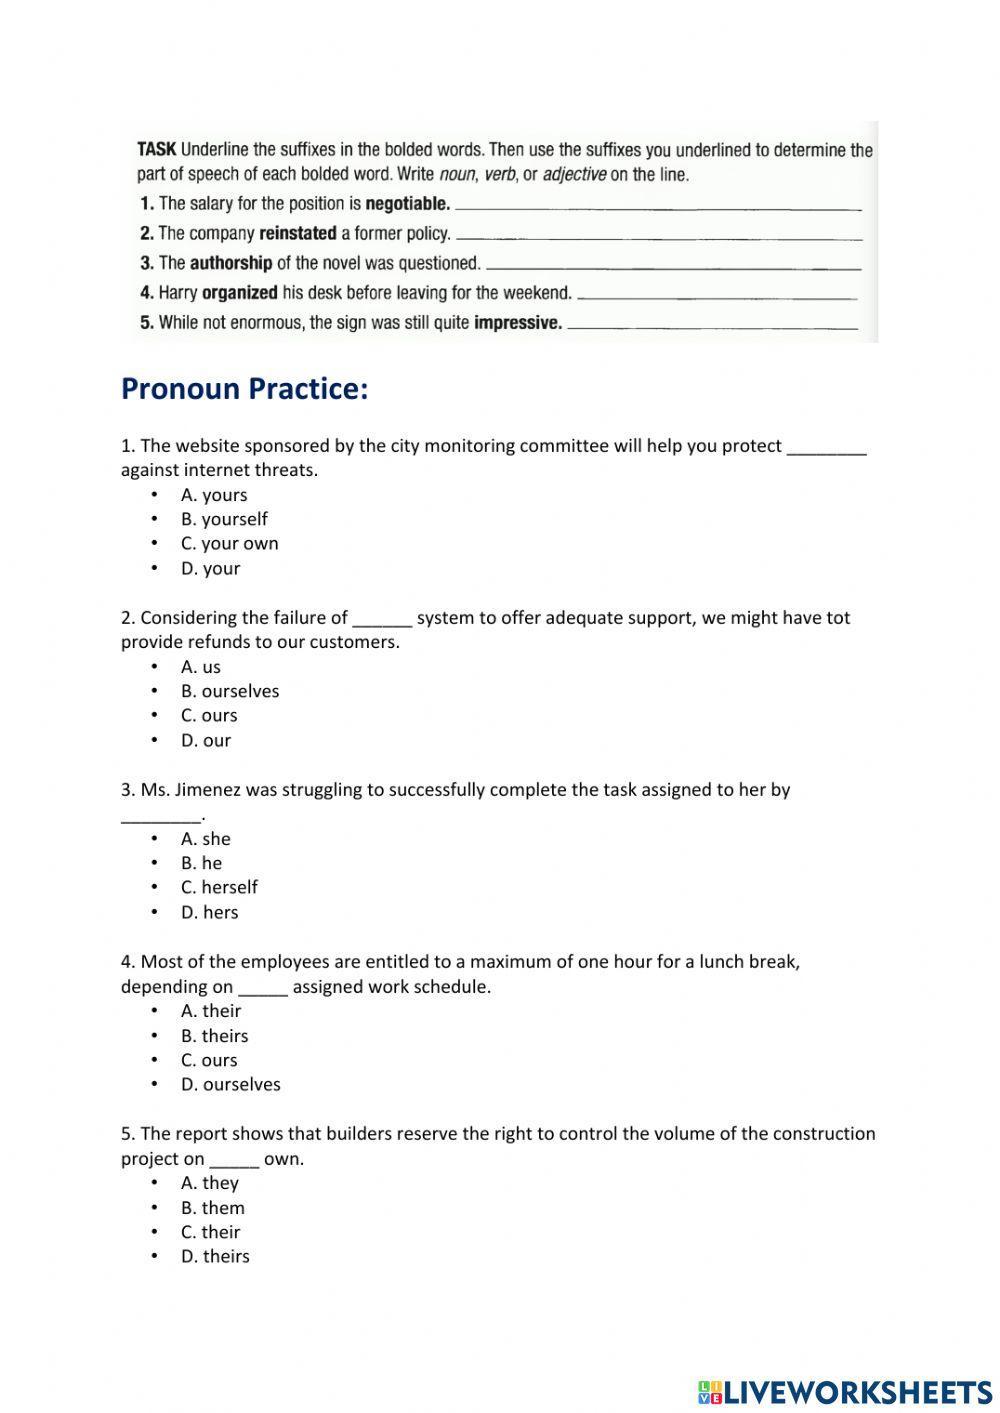 Pronoun practice